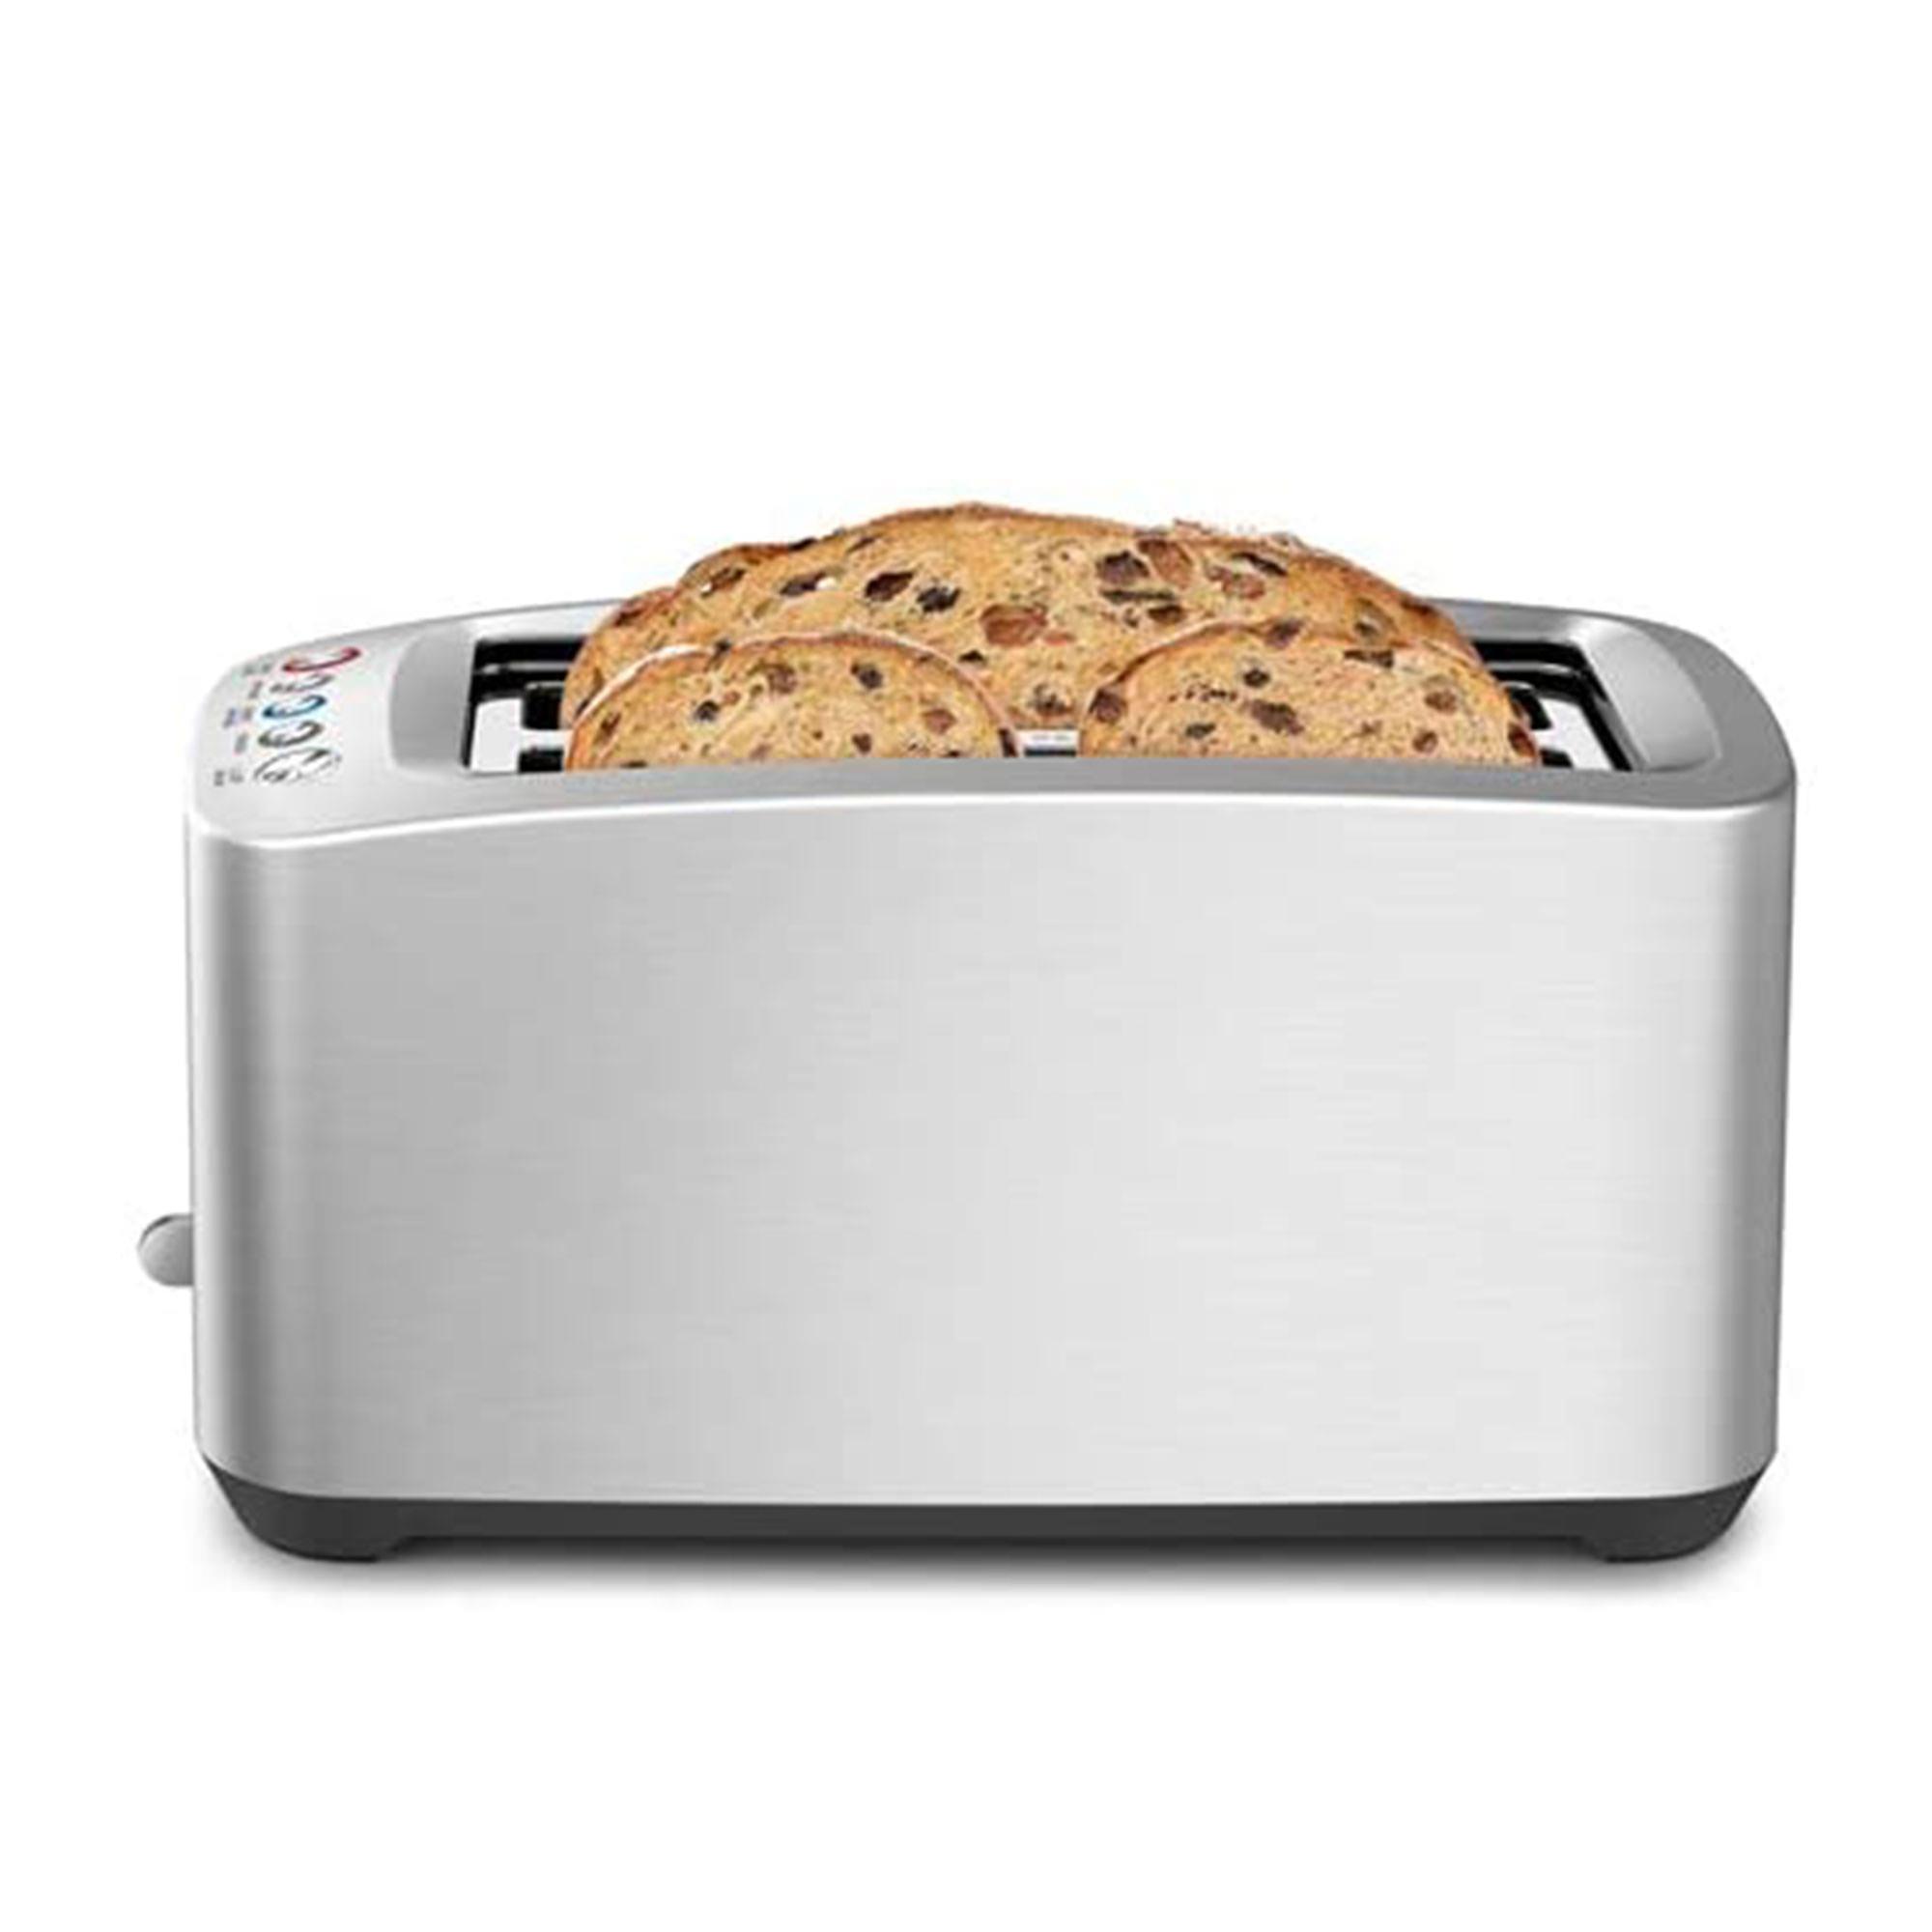 Breville The Smart Toast 4 Slice Toaster Image 3